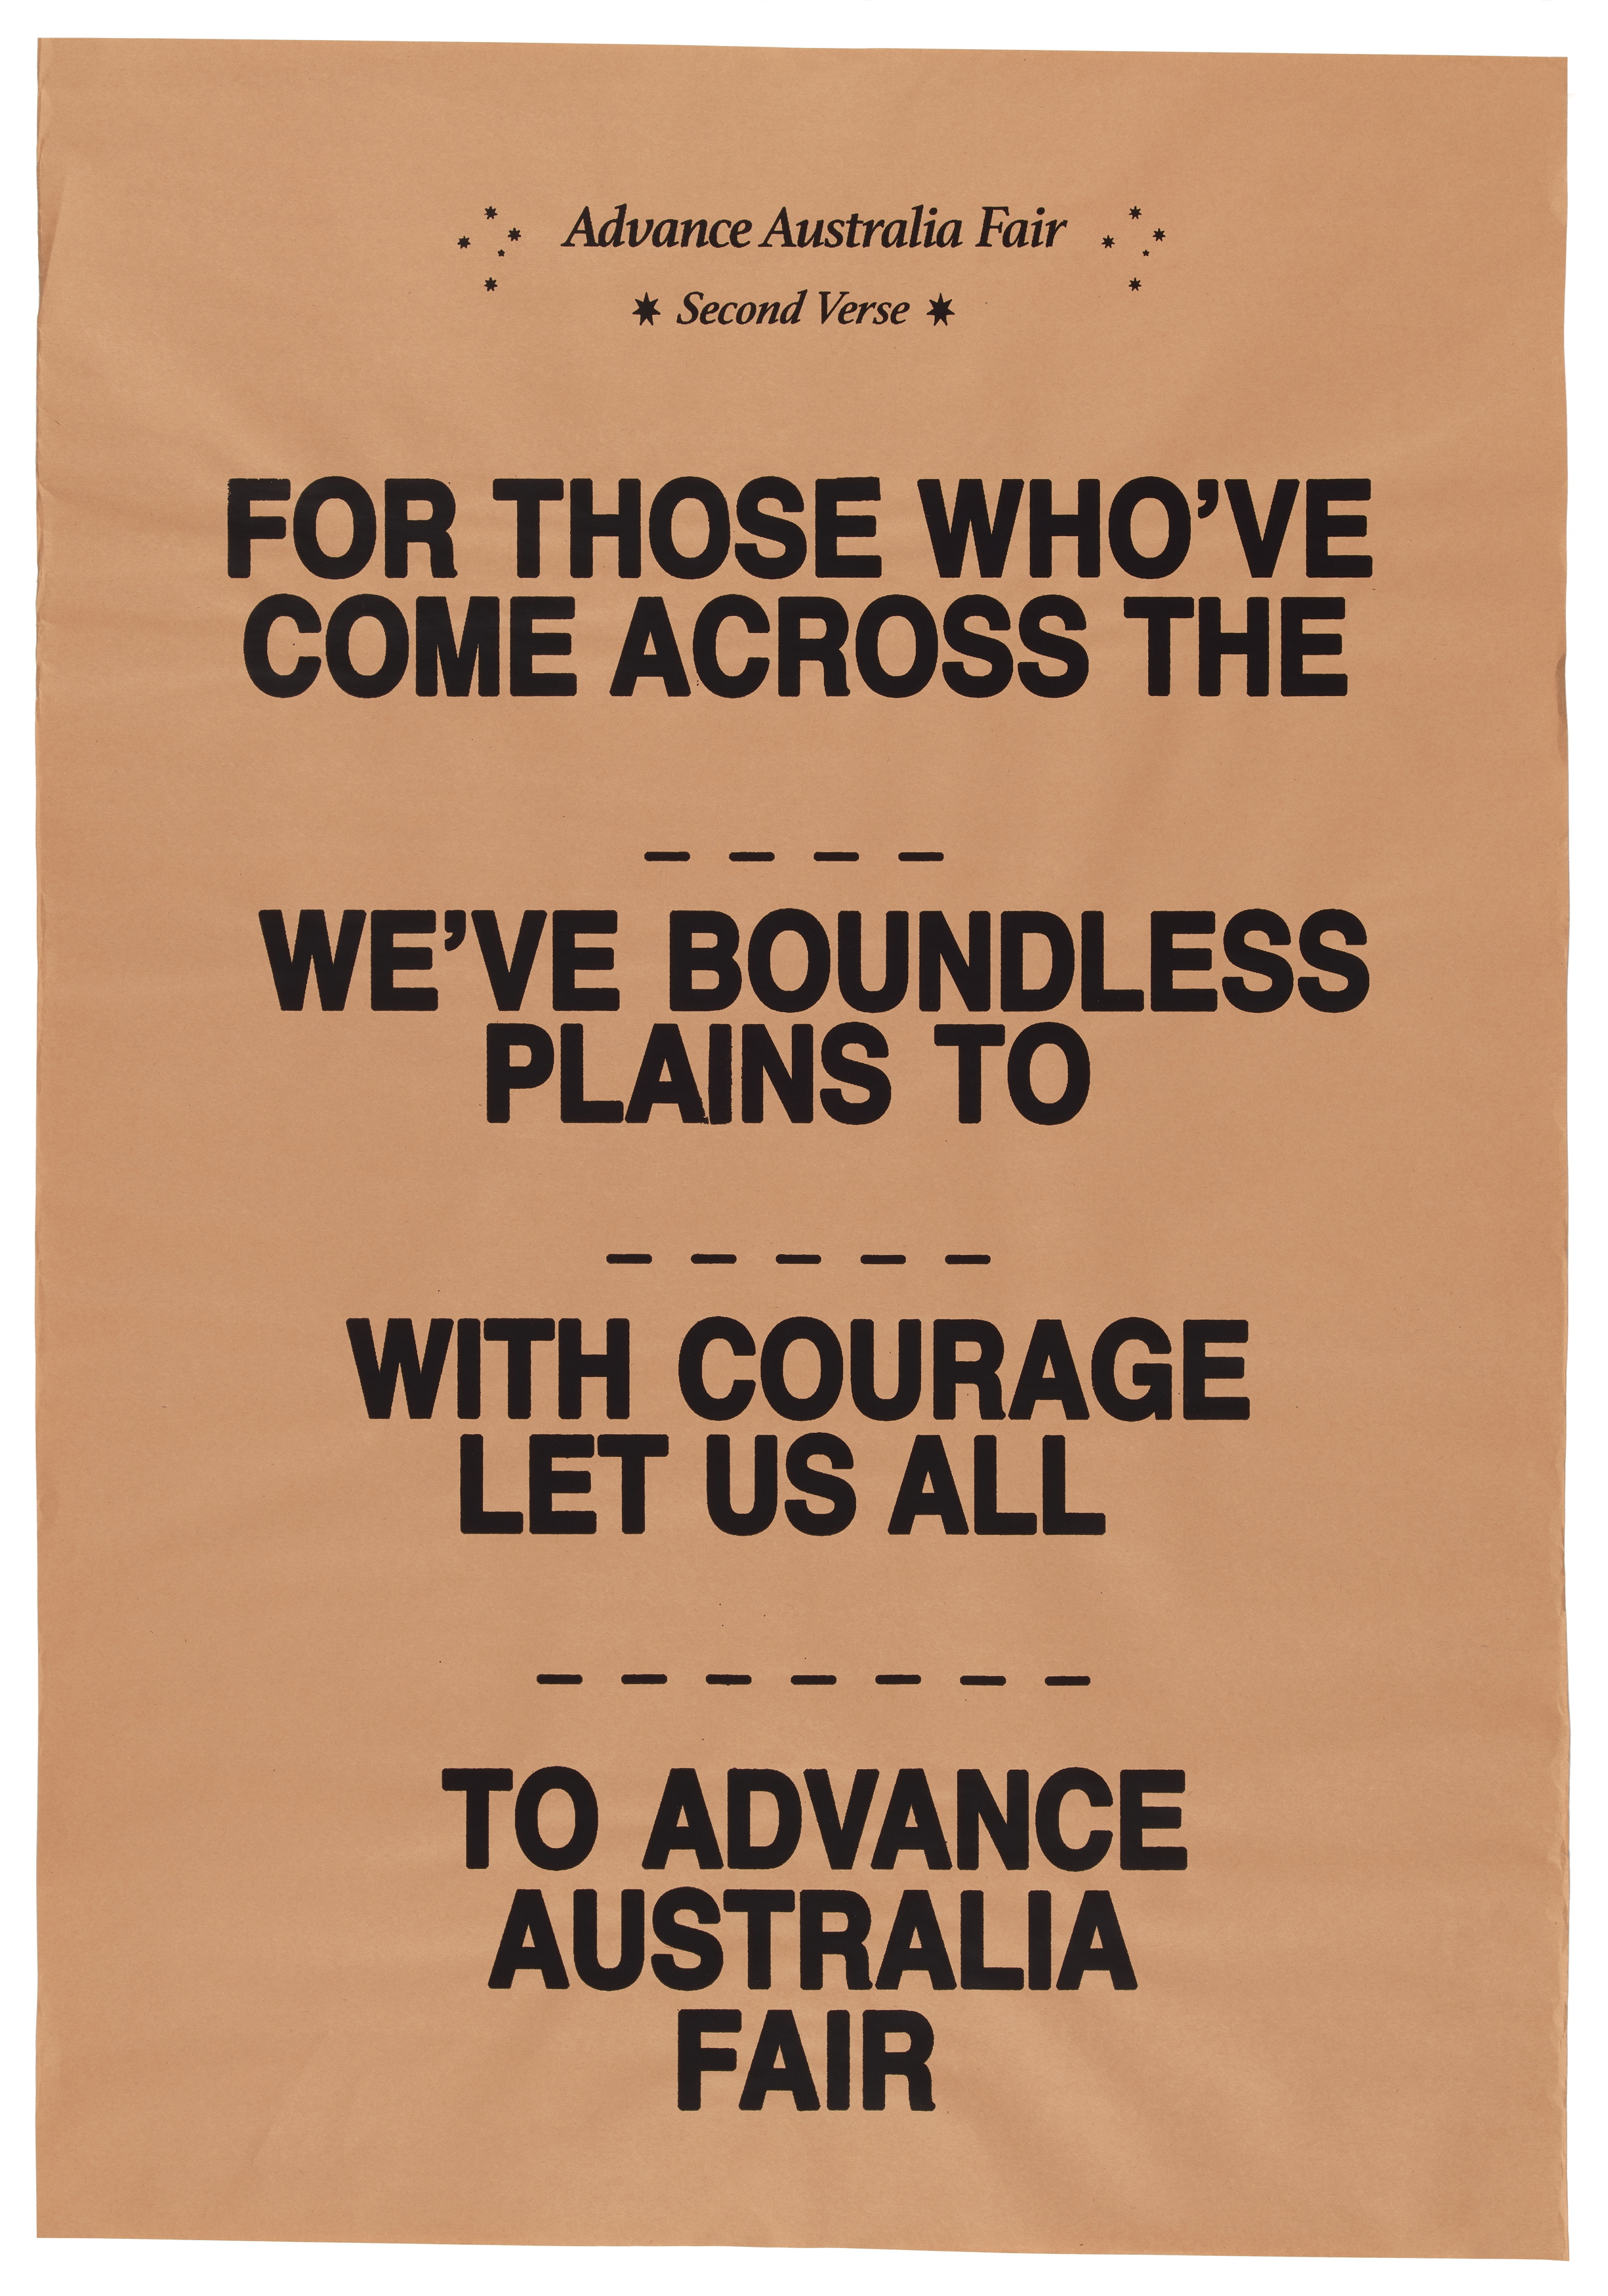 Poster, 'Advance Australia Fair, Second Verse', designed by Peter Drew